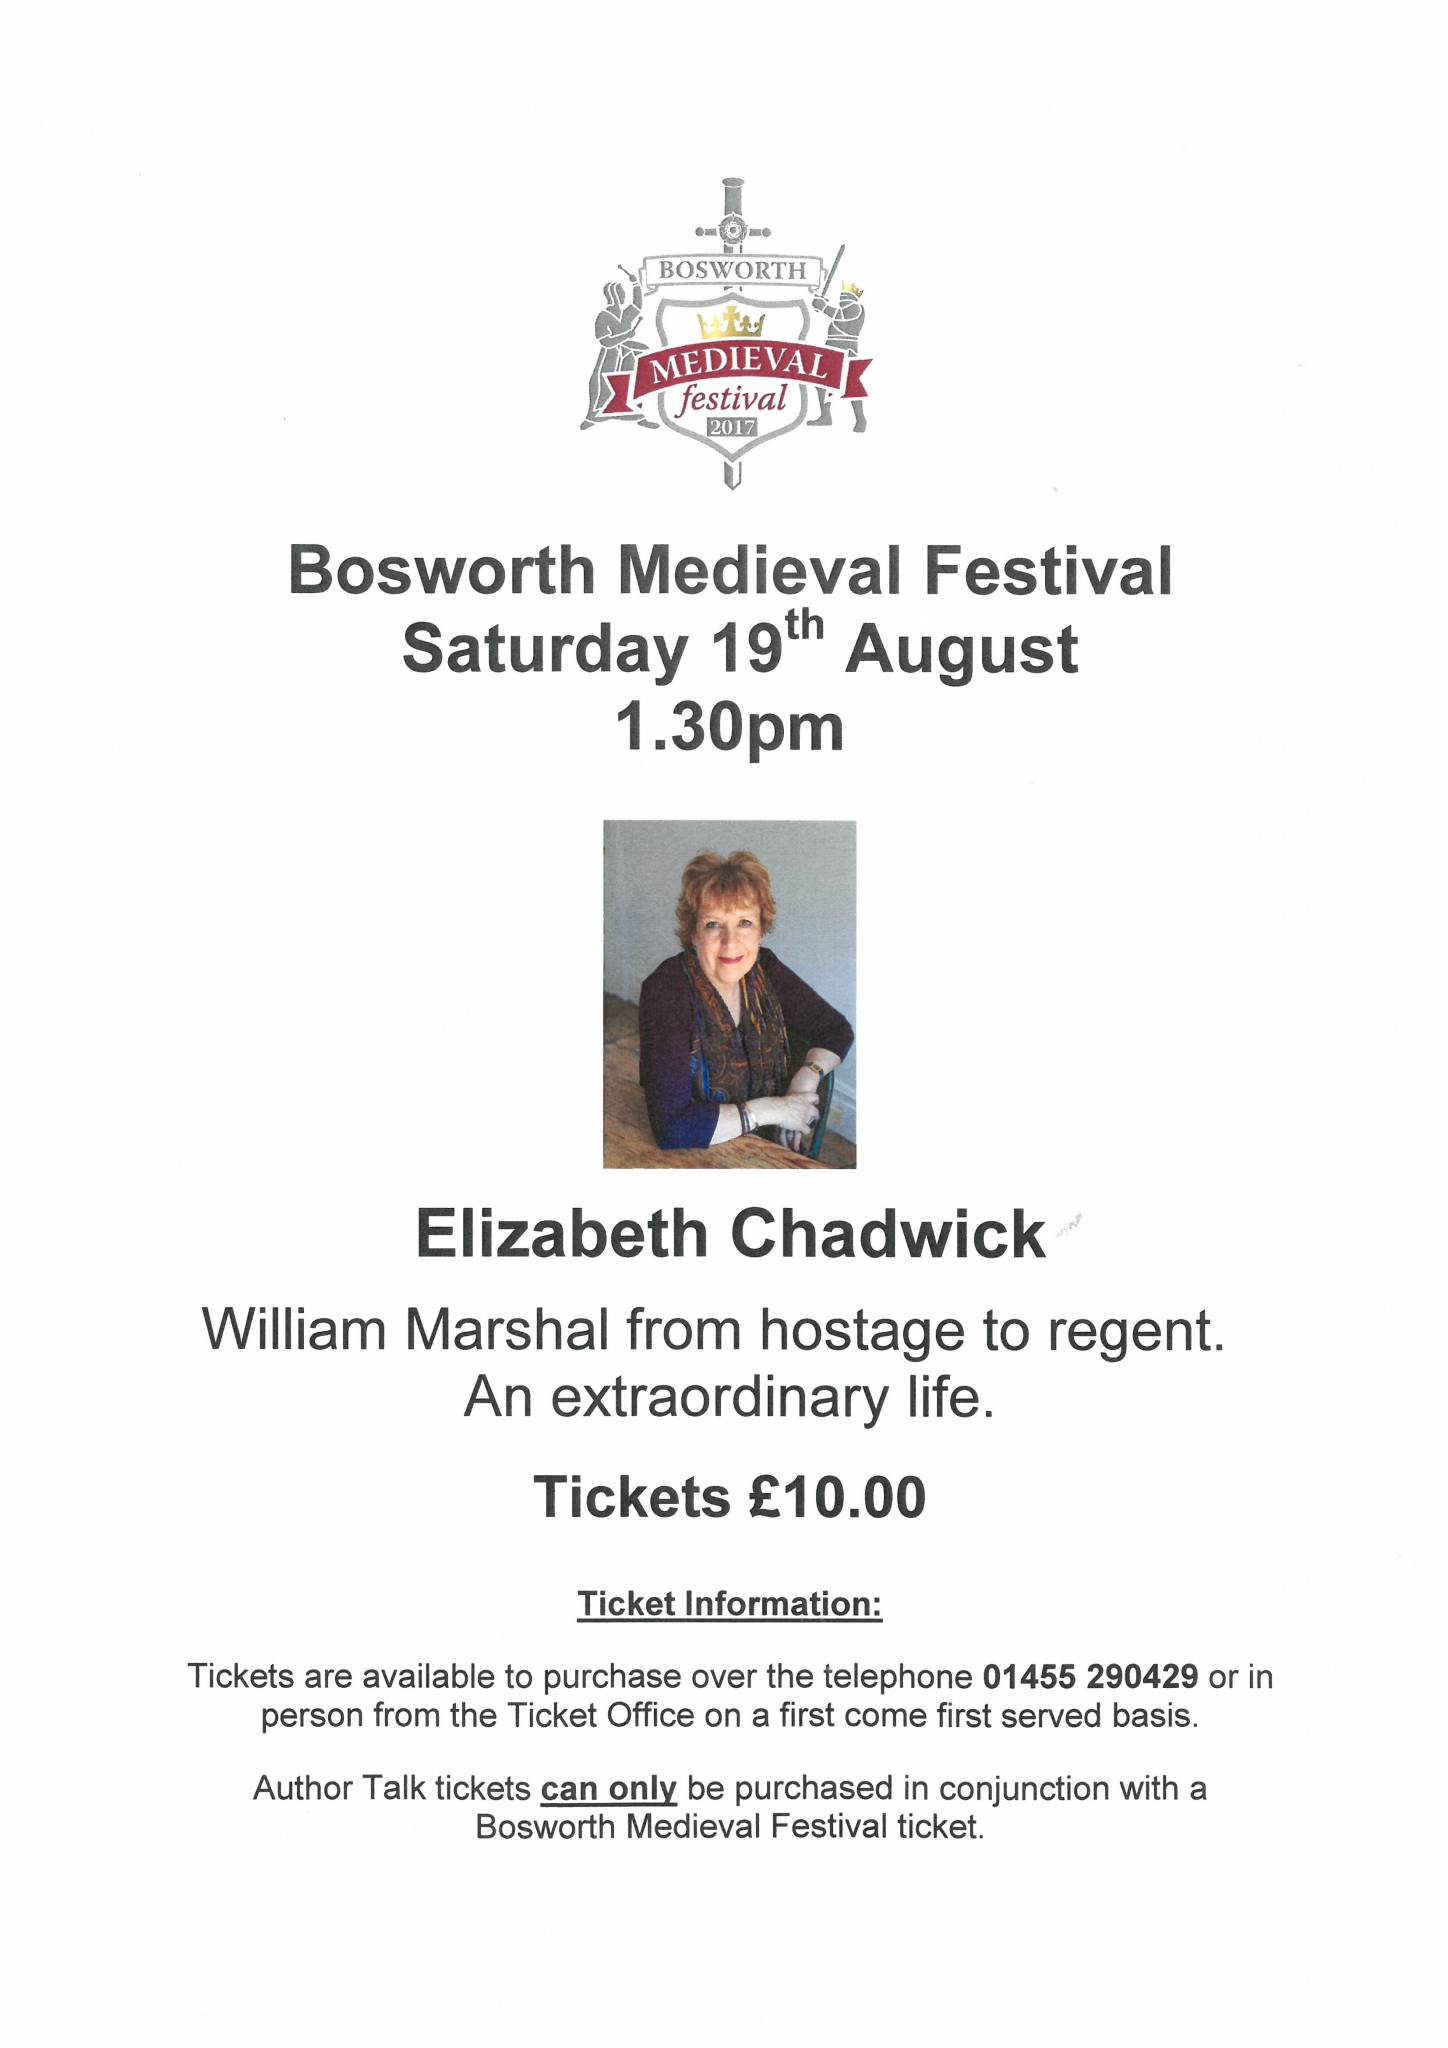 Elizabeth Chadwick Talk - William Marshall from Hostage to Regent: An Extraordinary Life